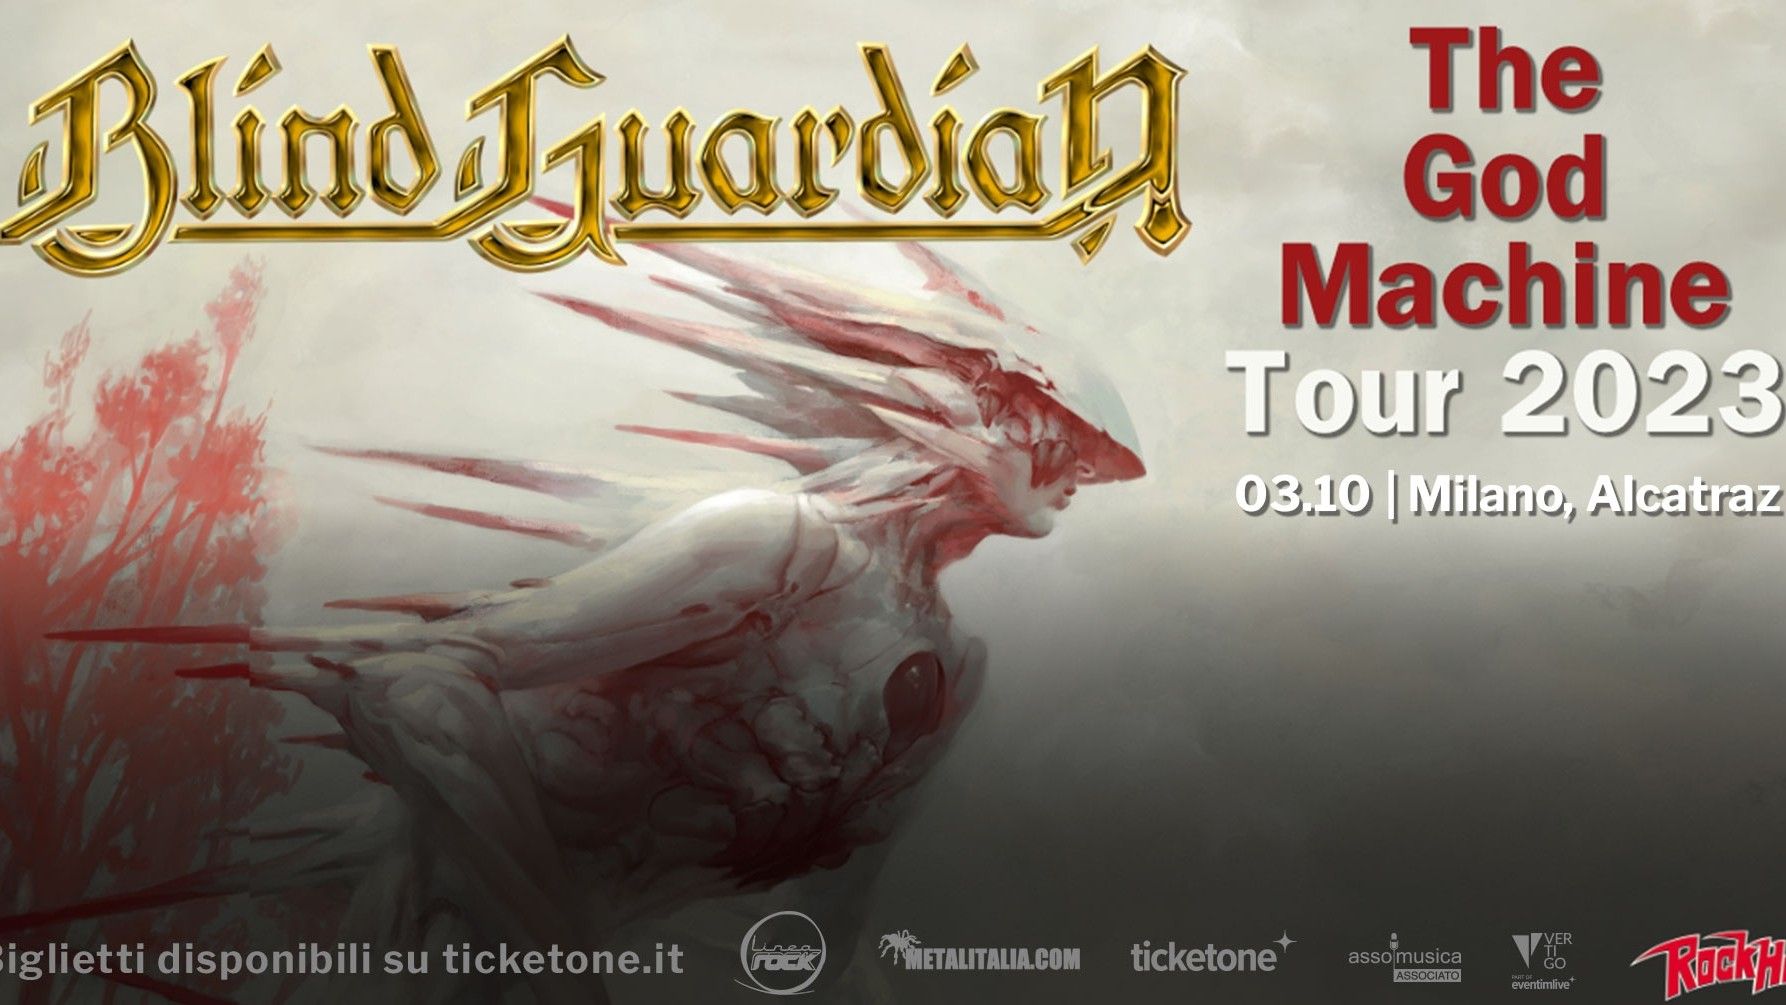 Blind Guardian - "The God Machine" Tour 2023